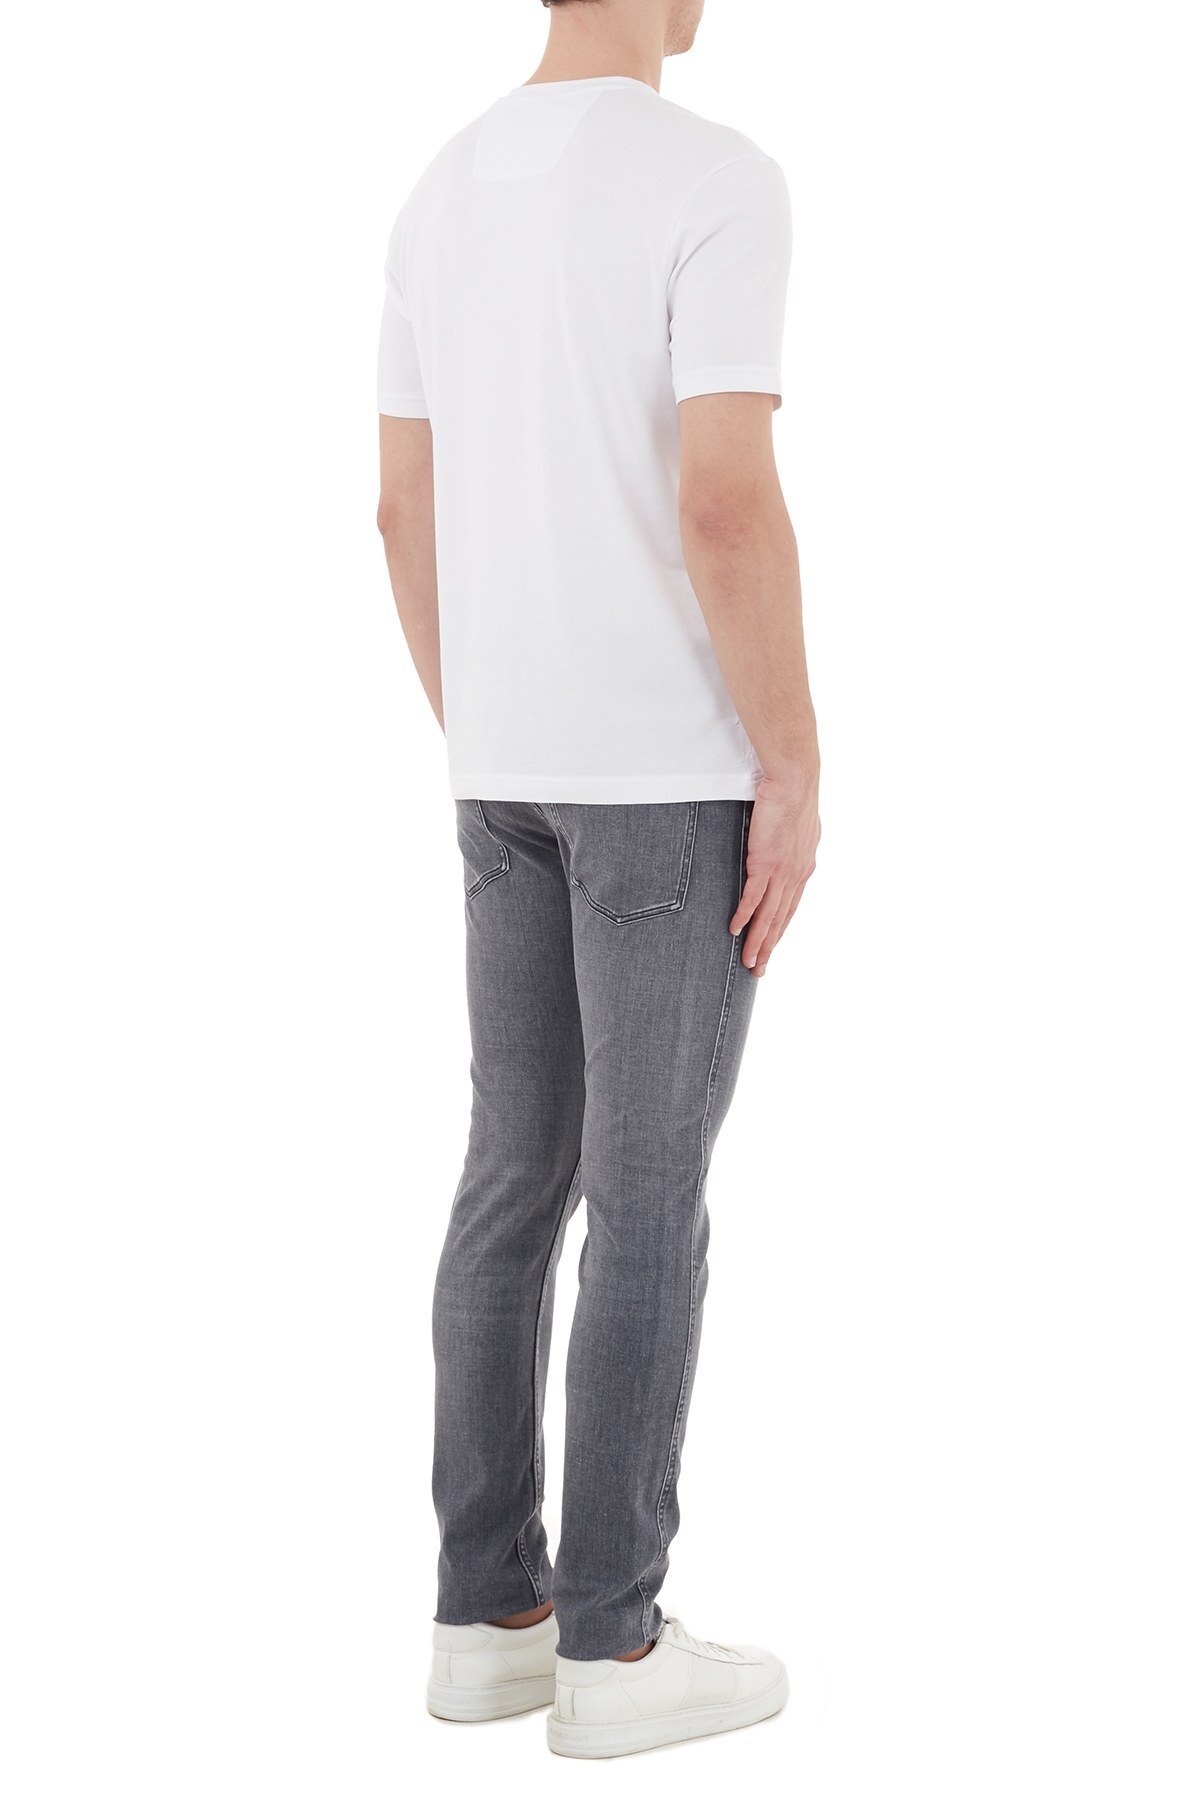 Hugo Boss Slim Fit Dar Paça Pamuklu Jeans Erkek Kot Pantolon 50438765 030 GRİ